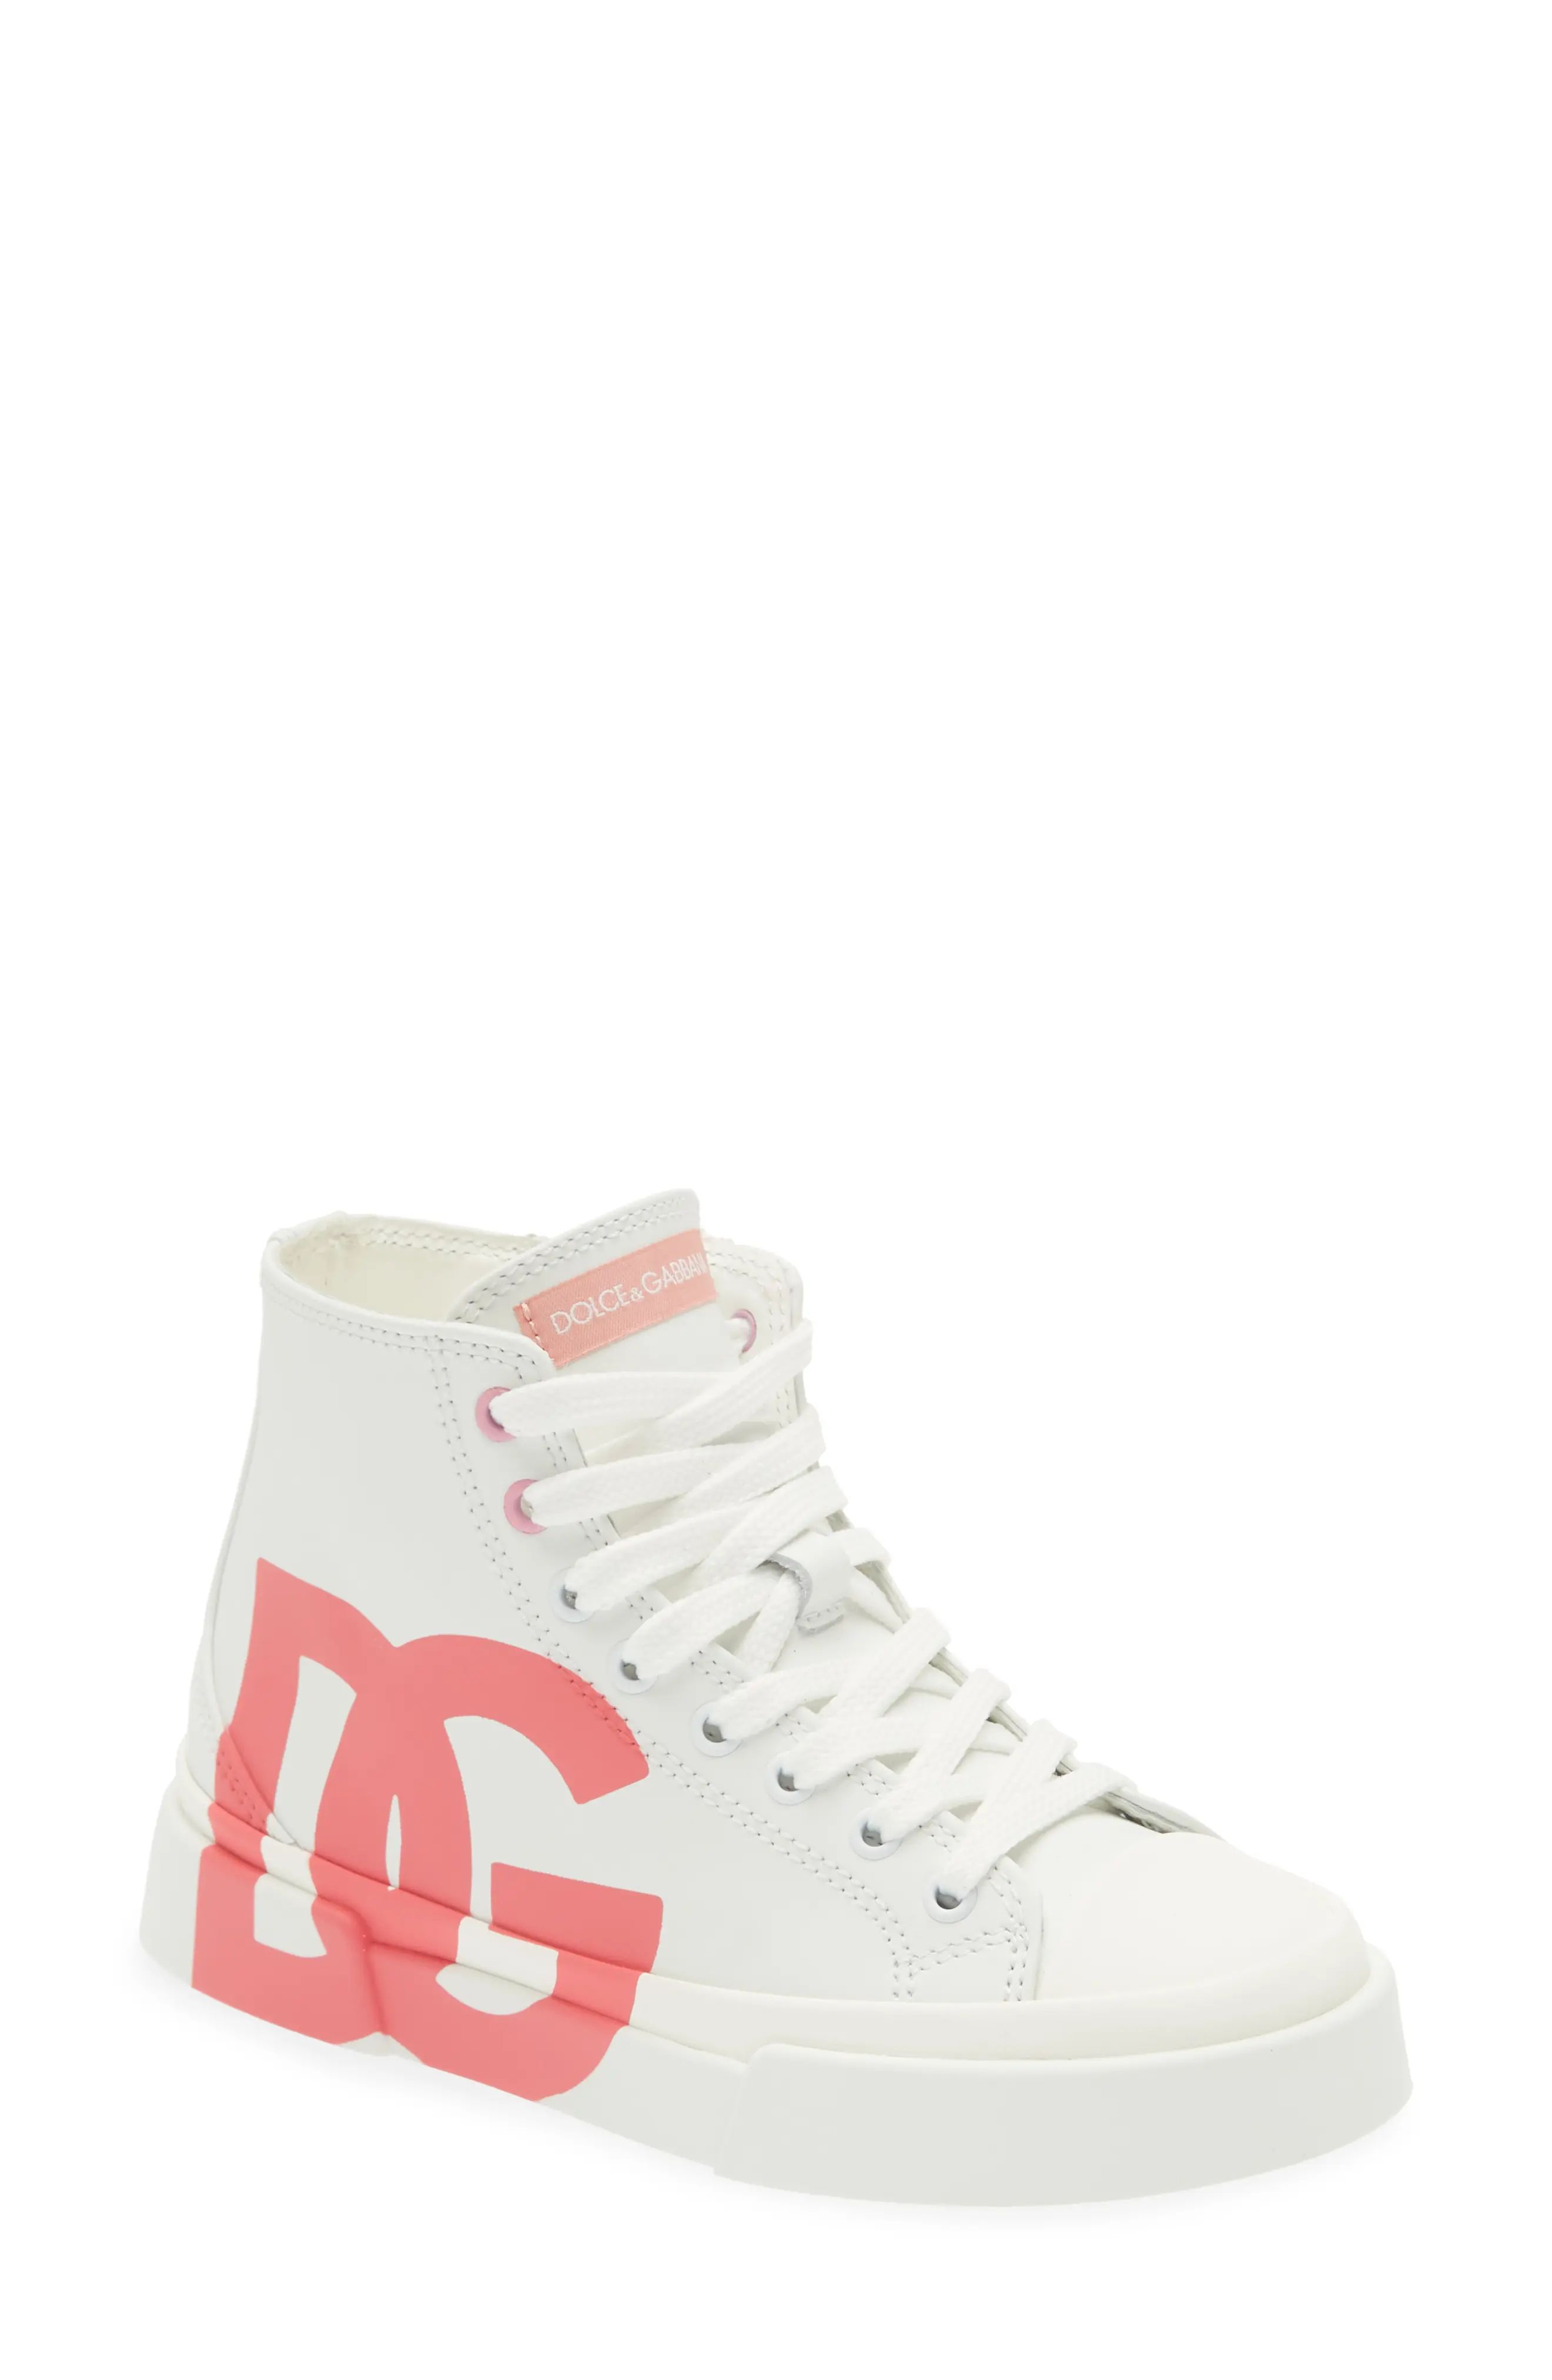 Dolce & Gabbana DG Logo High Top Sneaker in White/Pink at Nordstrom, Size 10Us | Nordstrom